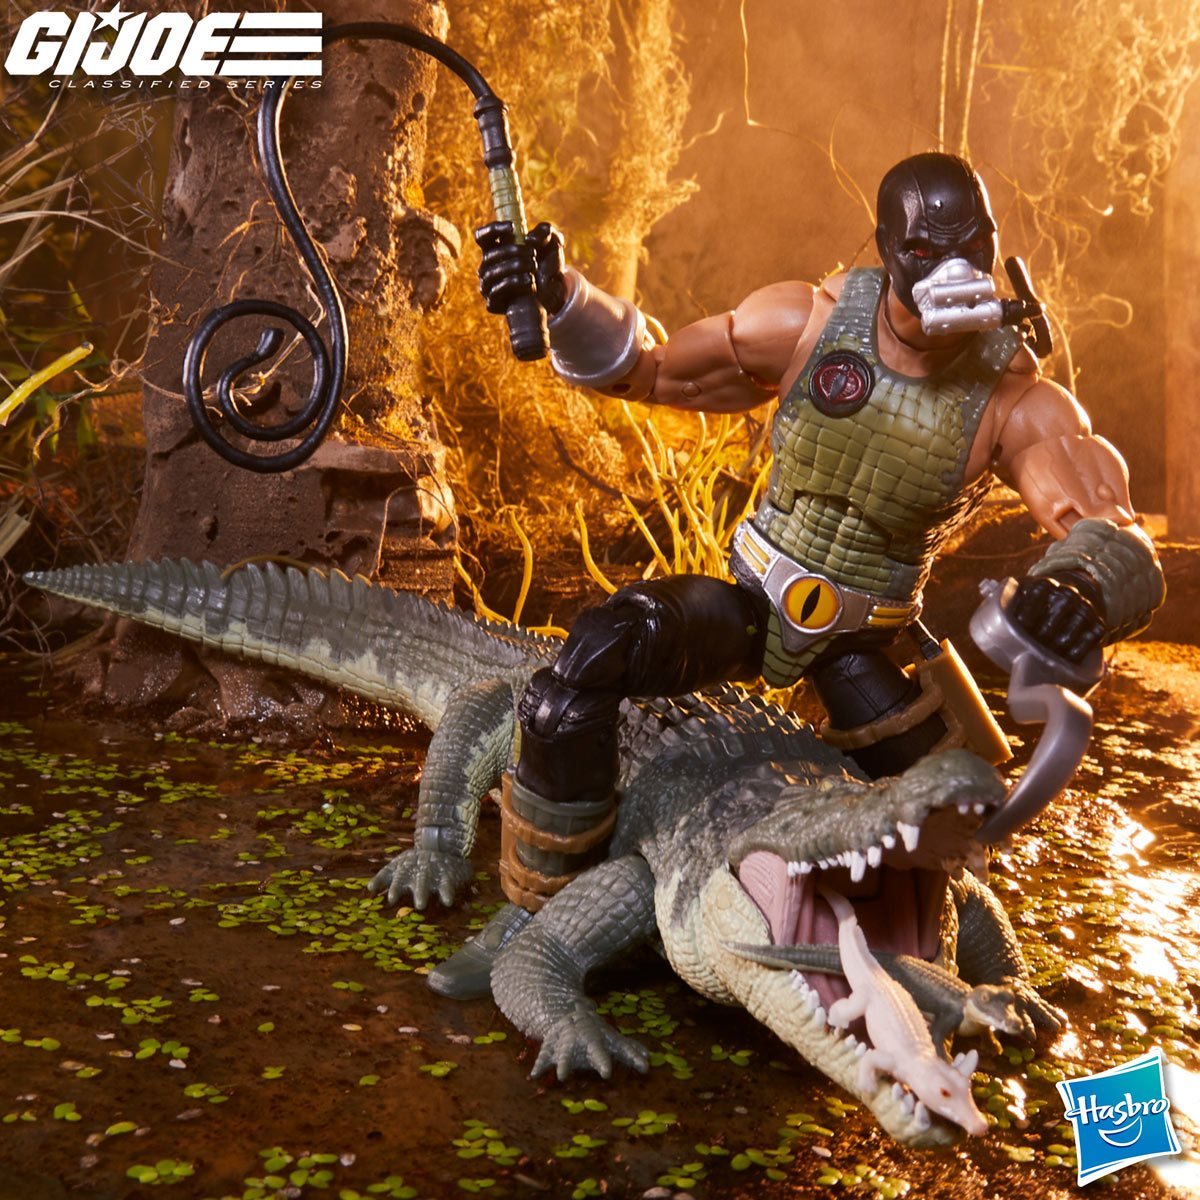 G.I. Joe Classified Series- Croc master 6 - Inch Action Figure